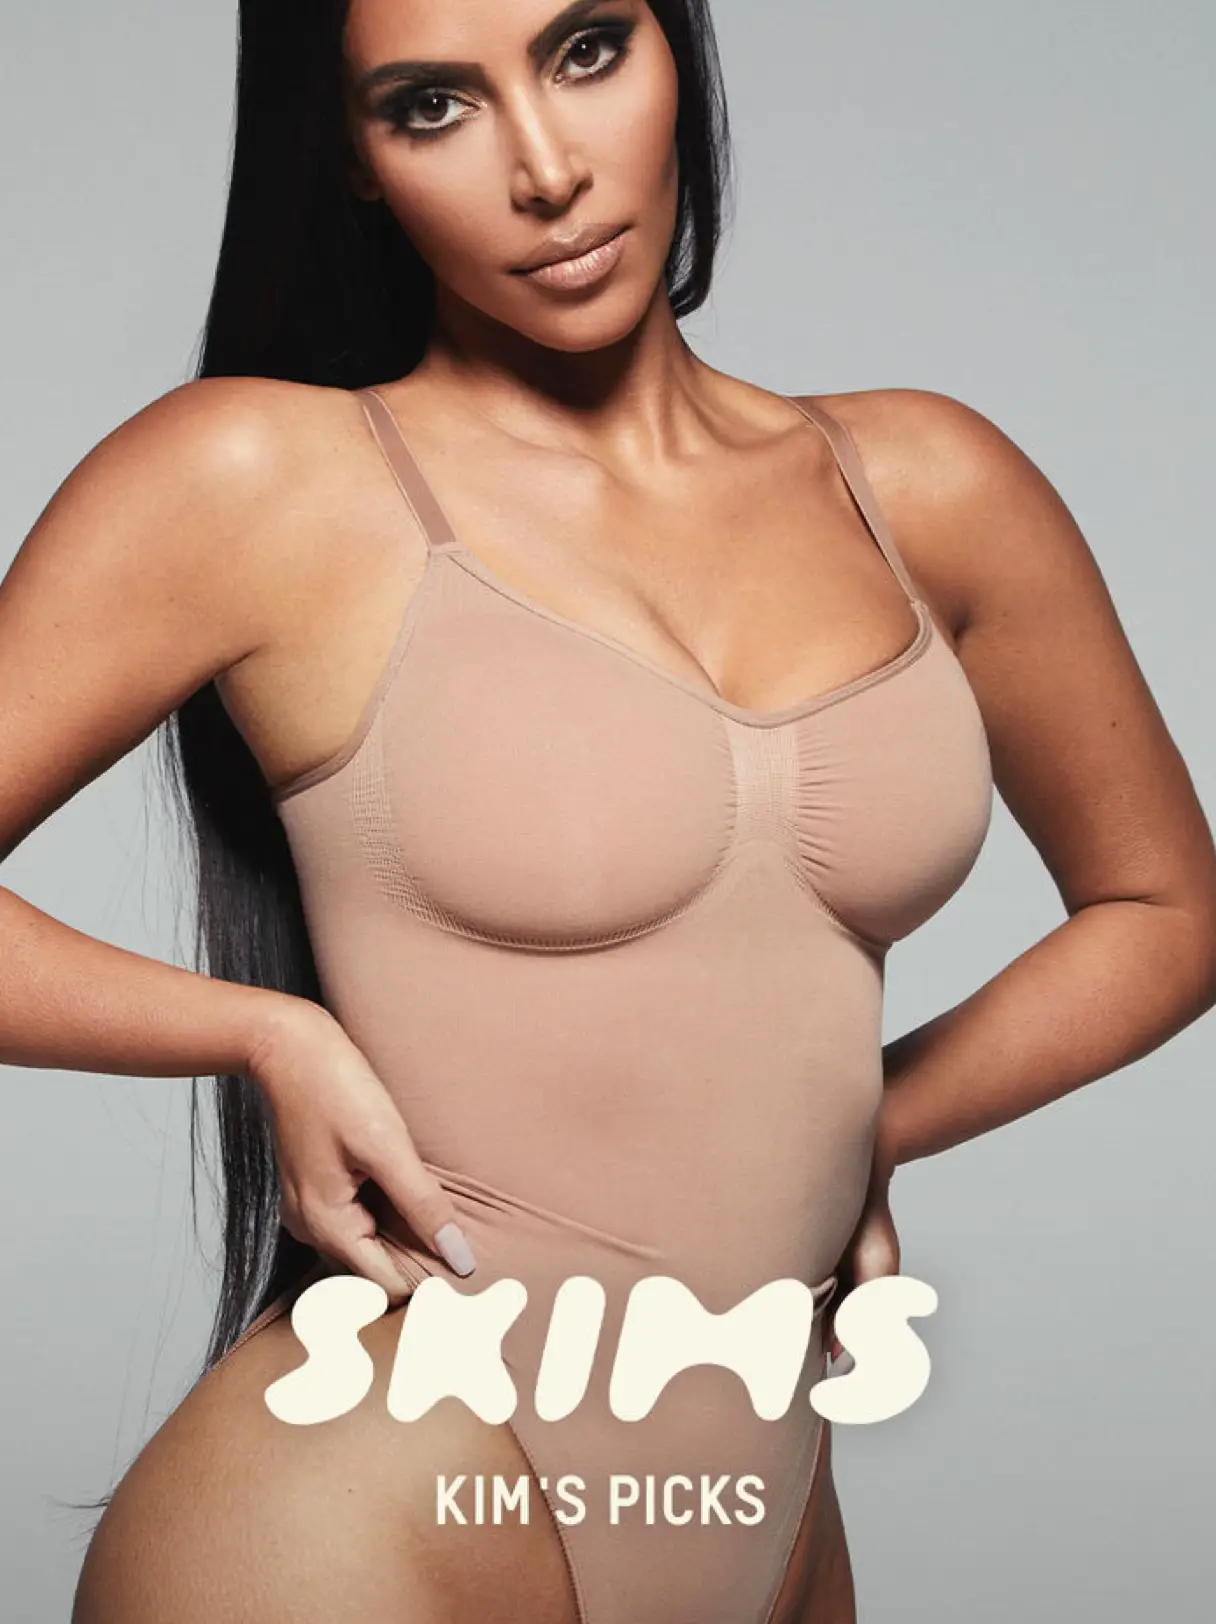 Zara shopper finds 'ultimate' dupe for Kim Kardashian's SKIMS